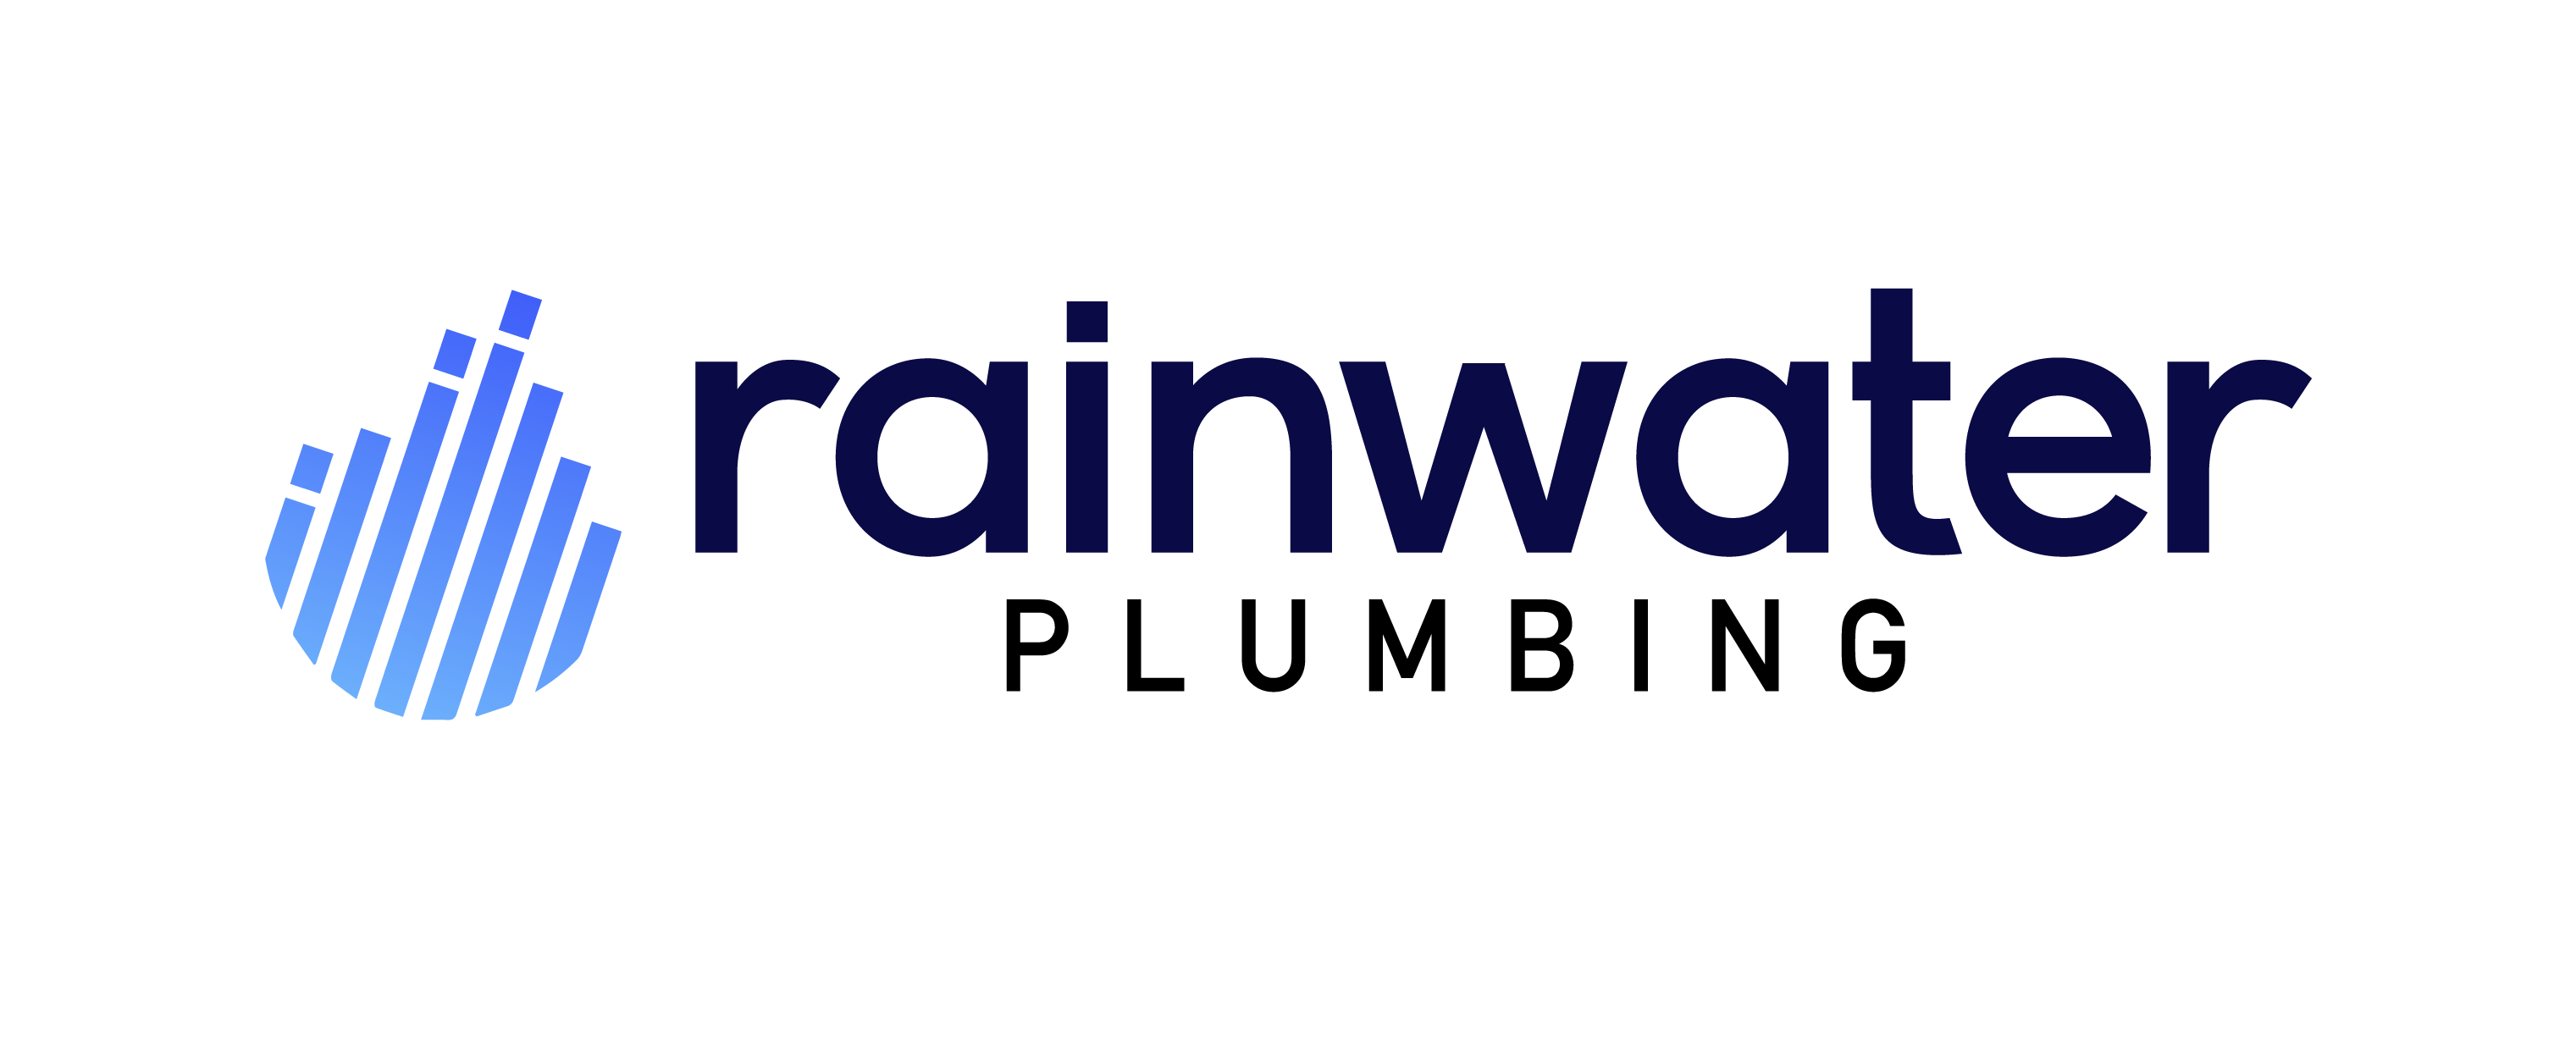 about rainwater plumbing